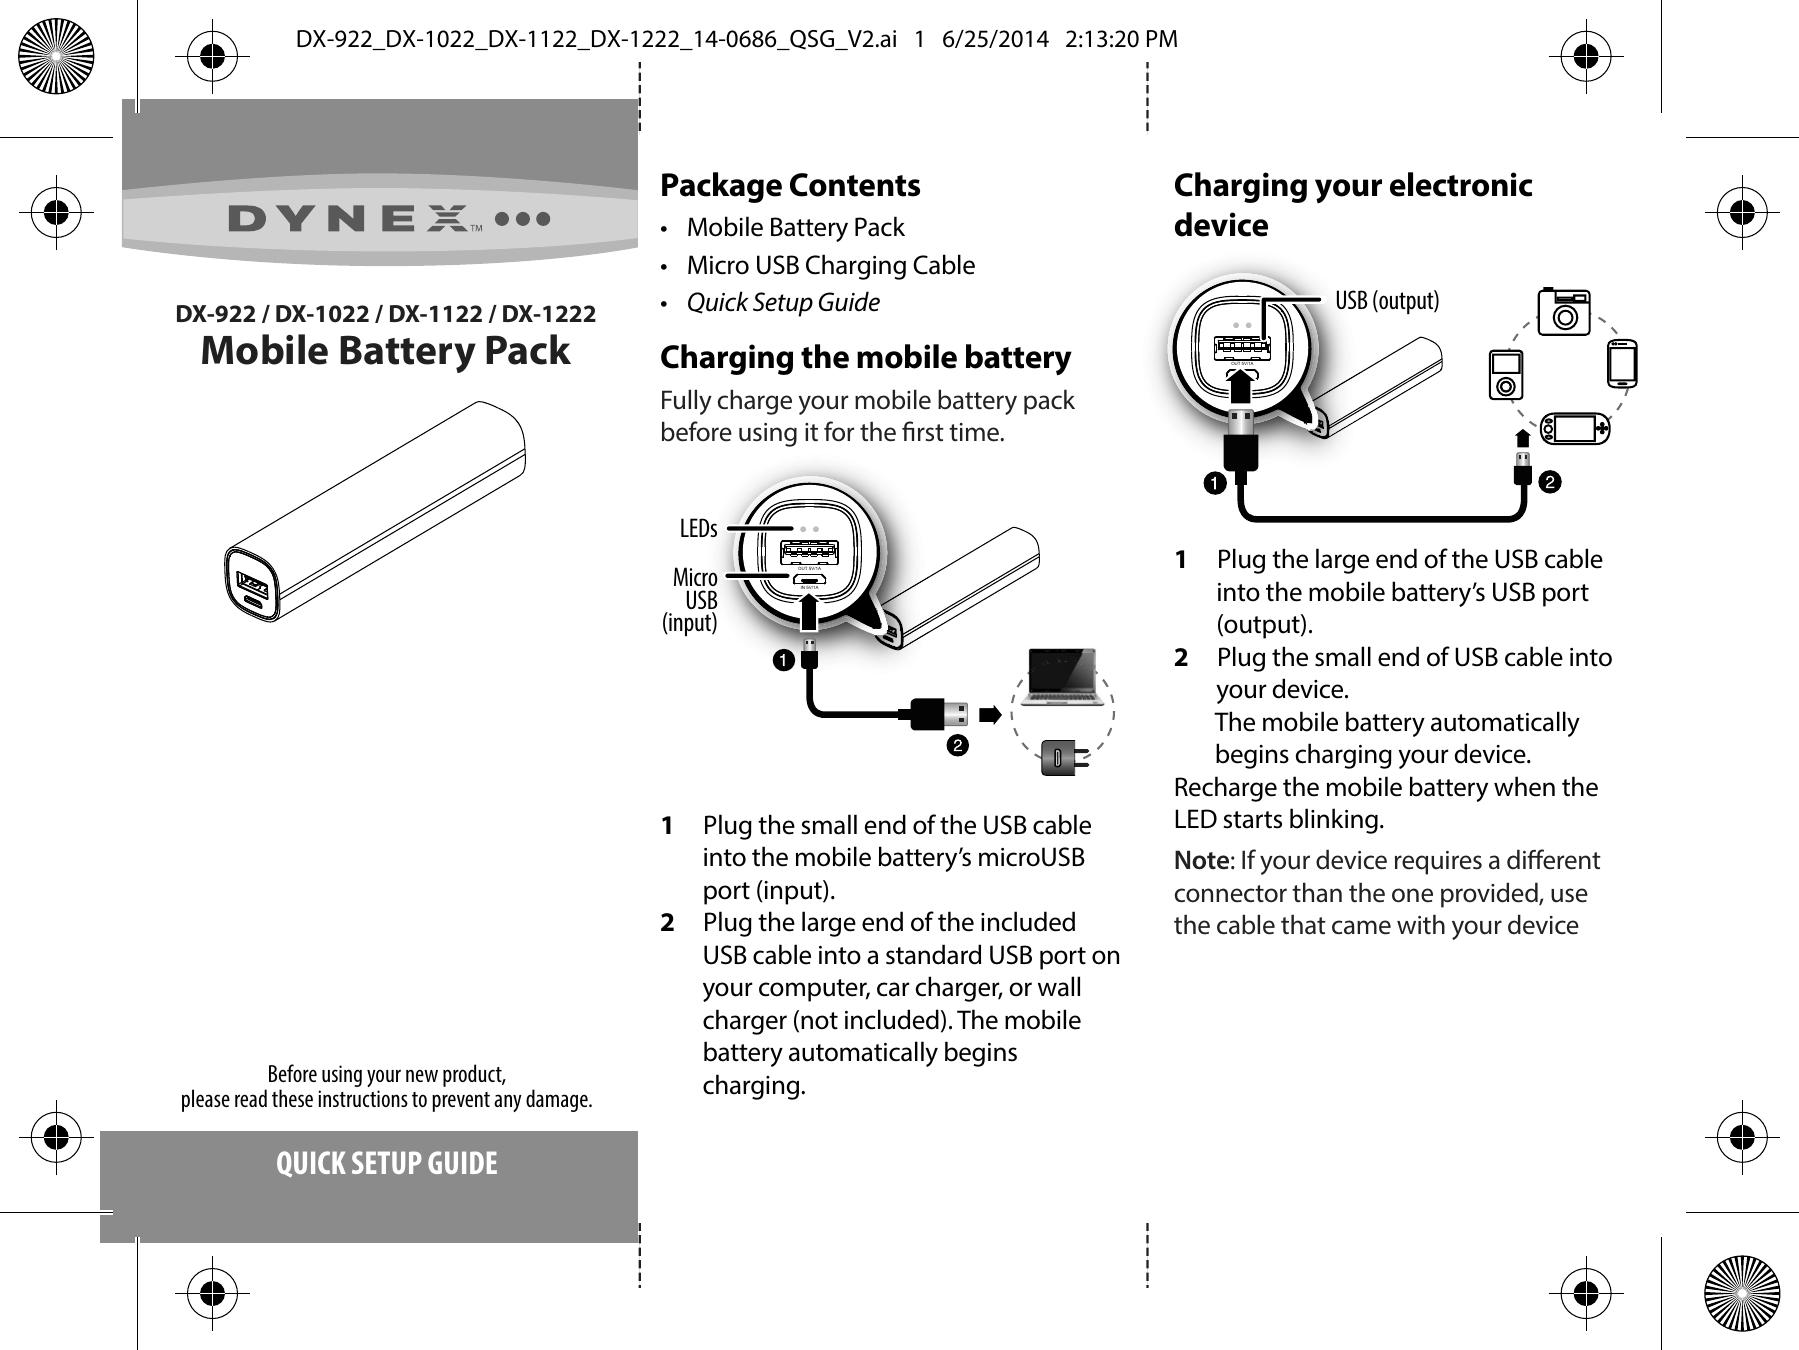 Dynex DX-1022 Marine Battery User Manual